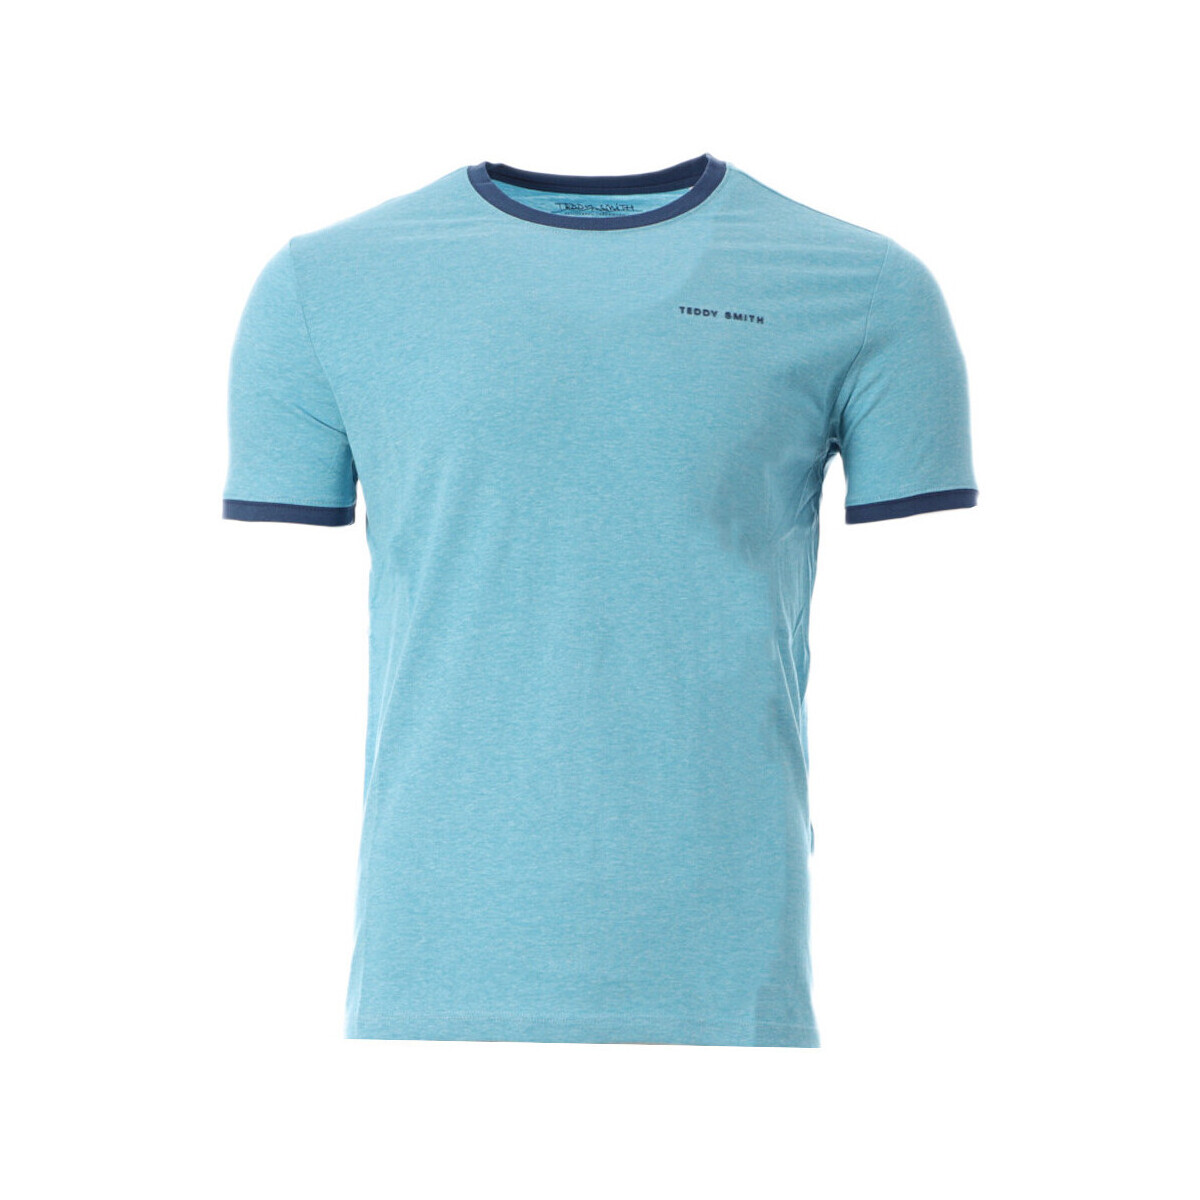 Vêtements Homme Space Jam Jam Logo T Shirt Junior 11016811D Bleu